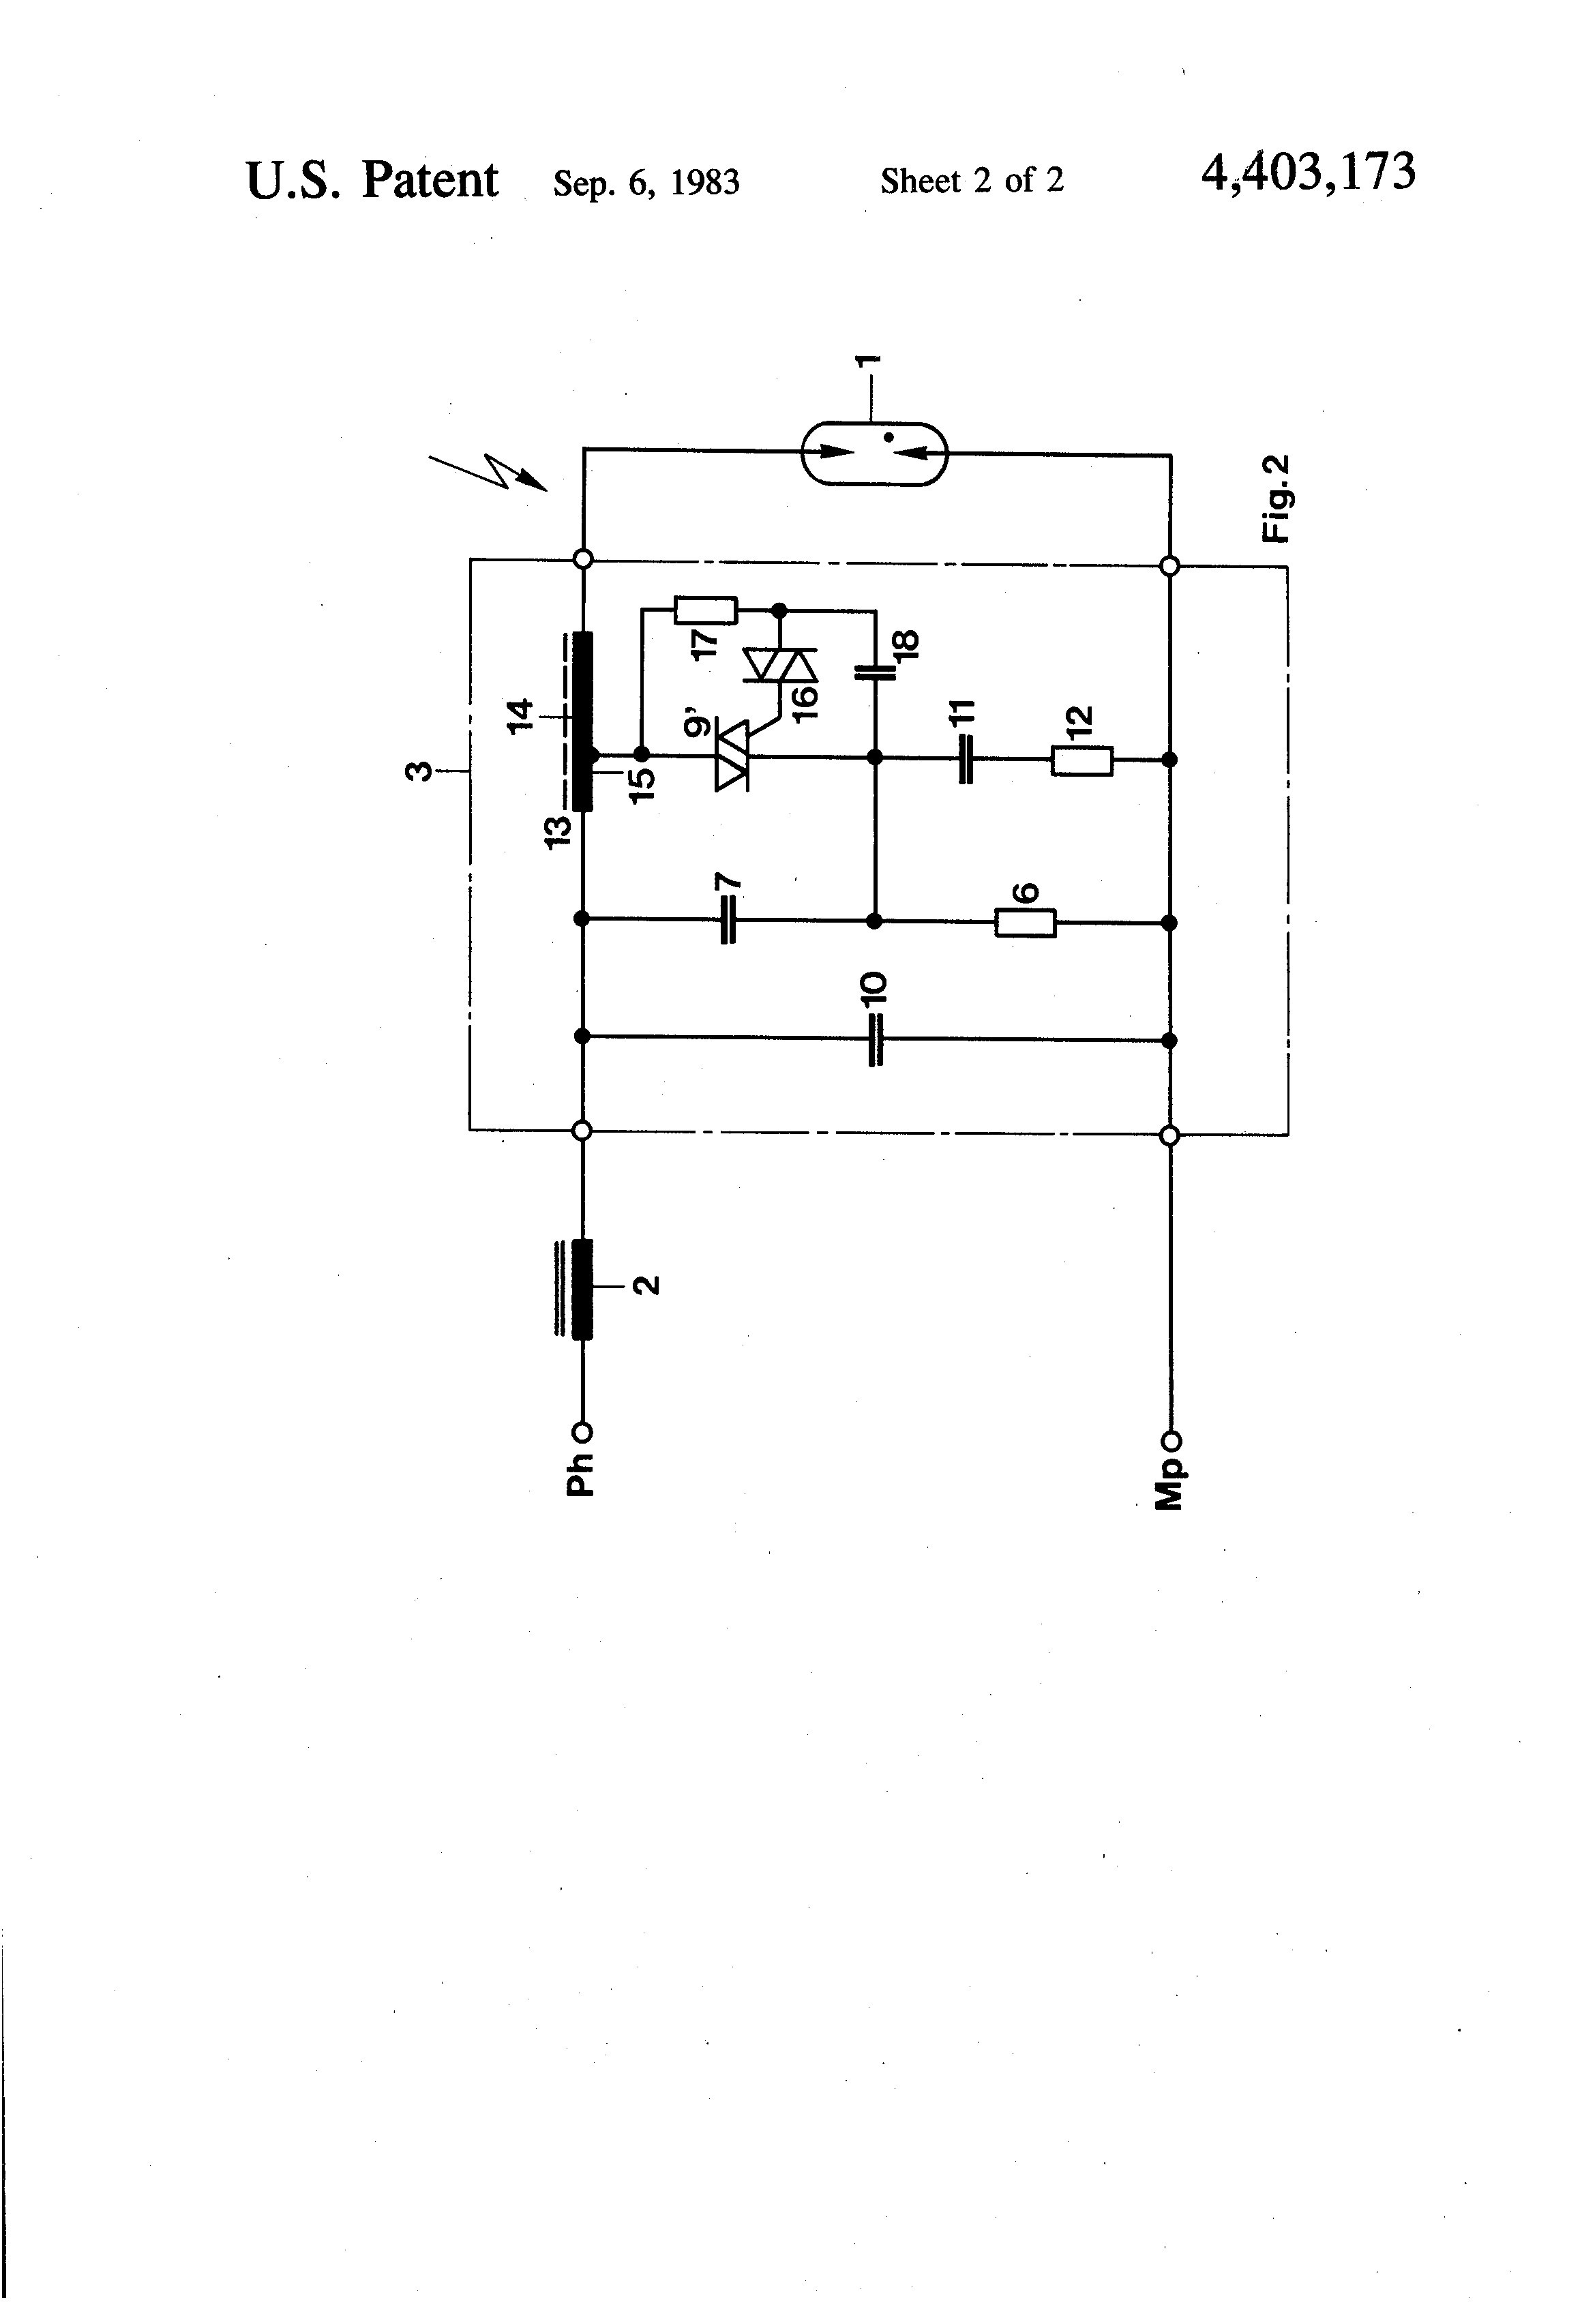 High Pressure sodium Lamp Wiring Diagram Best Wiring A Gang Way Light Switch Craluxlighting Diagram